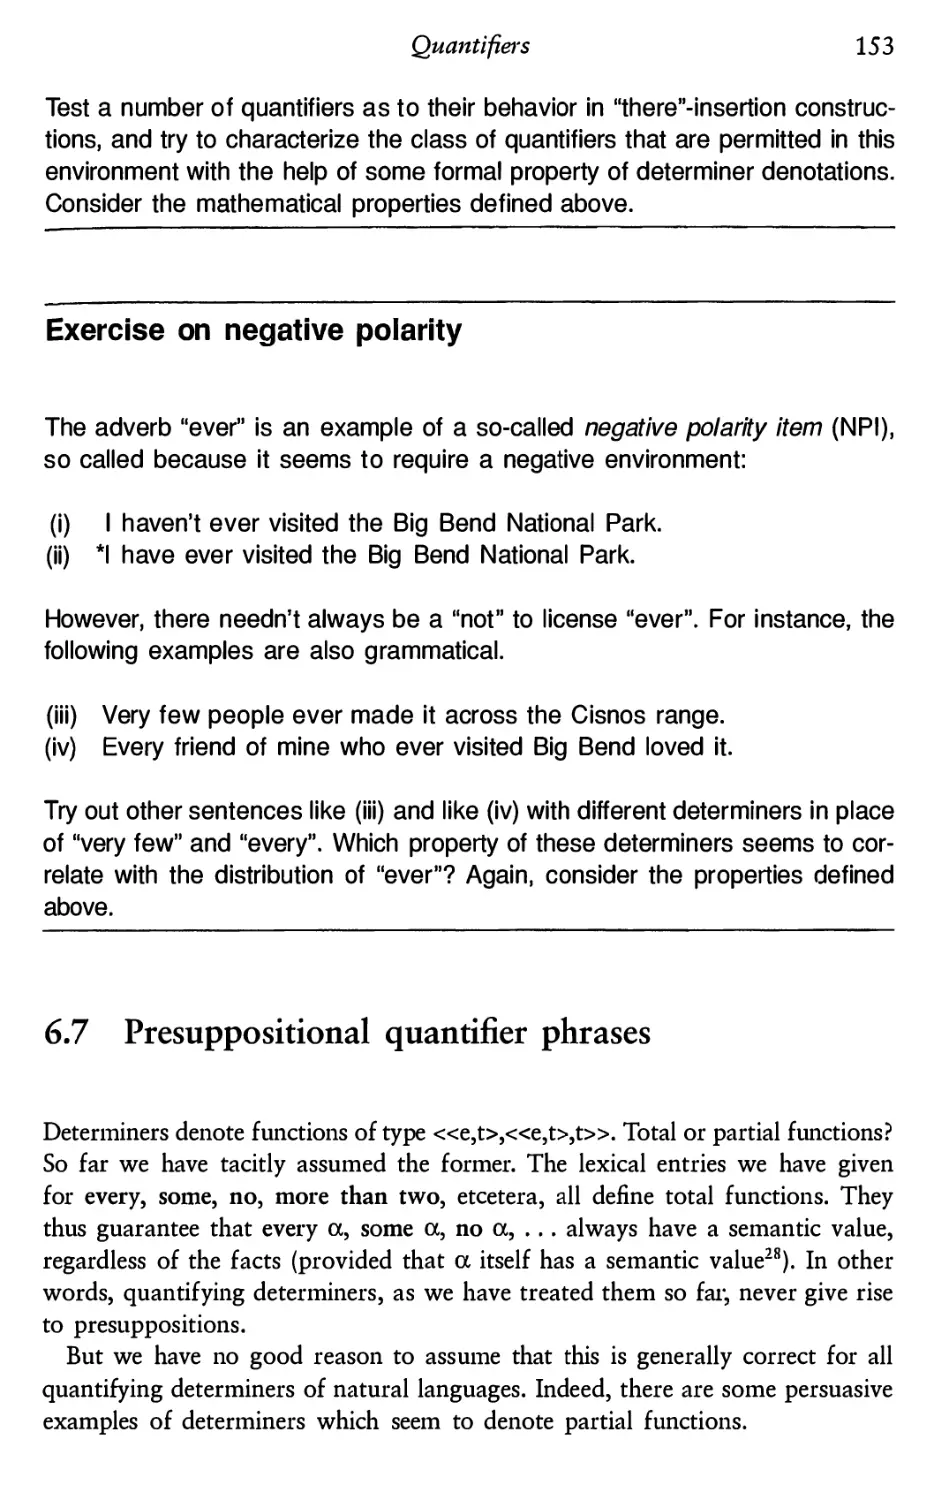 6.7 Presuppositional quantifier phrases